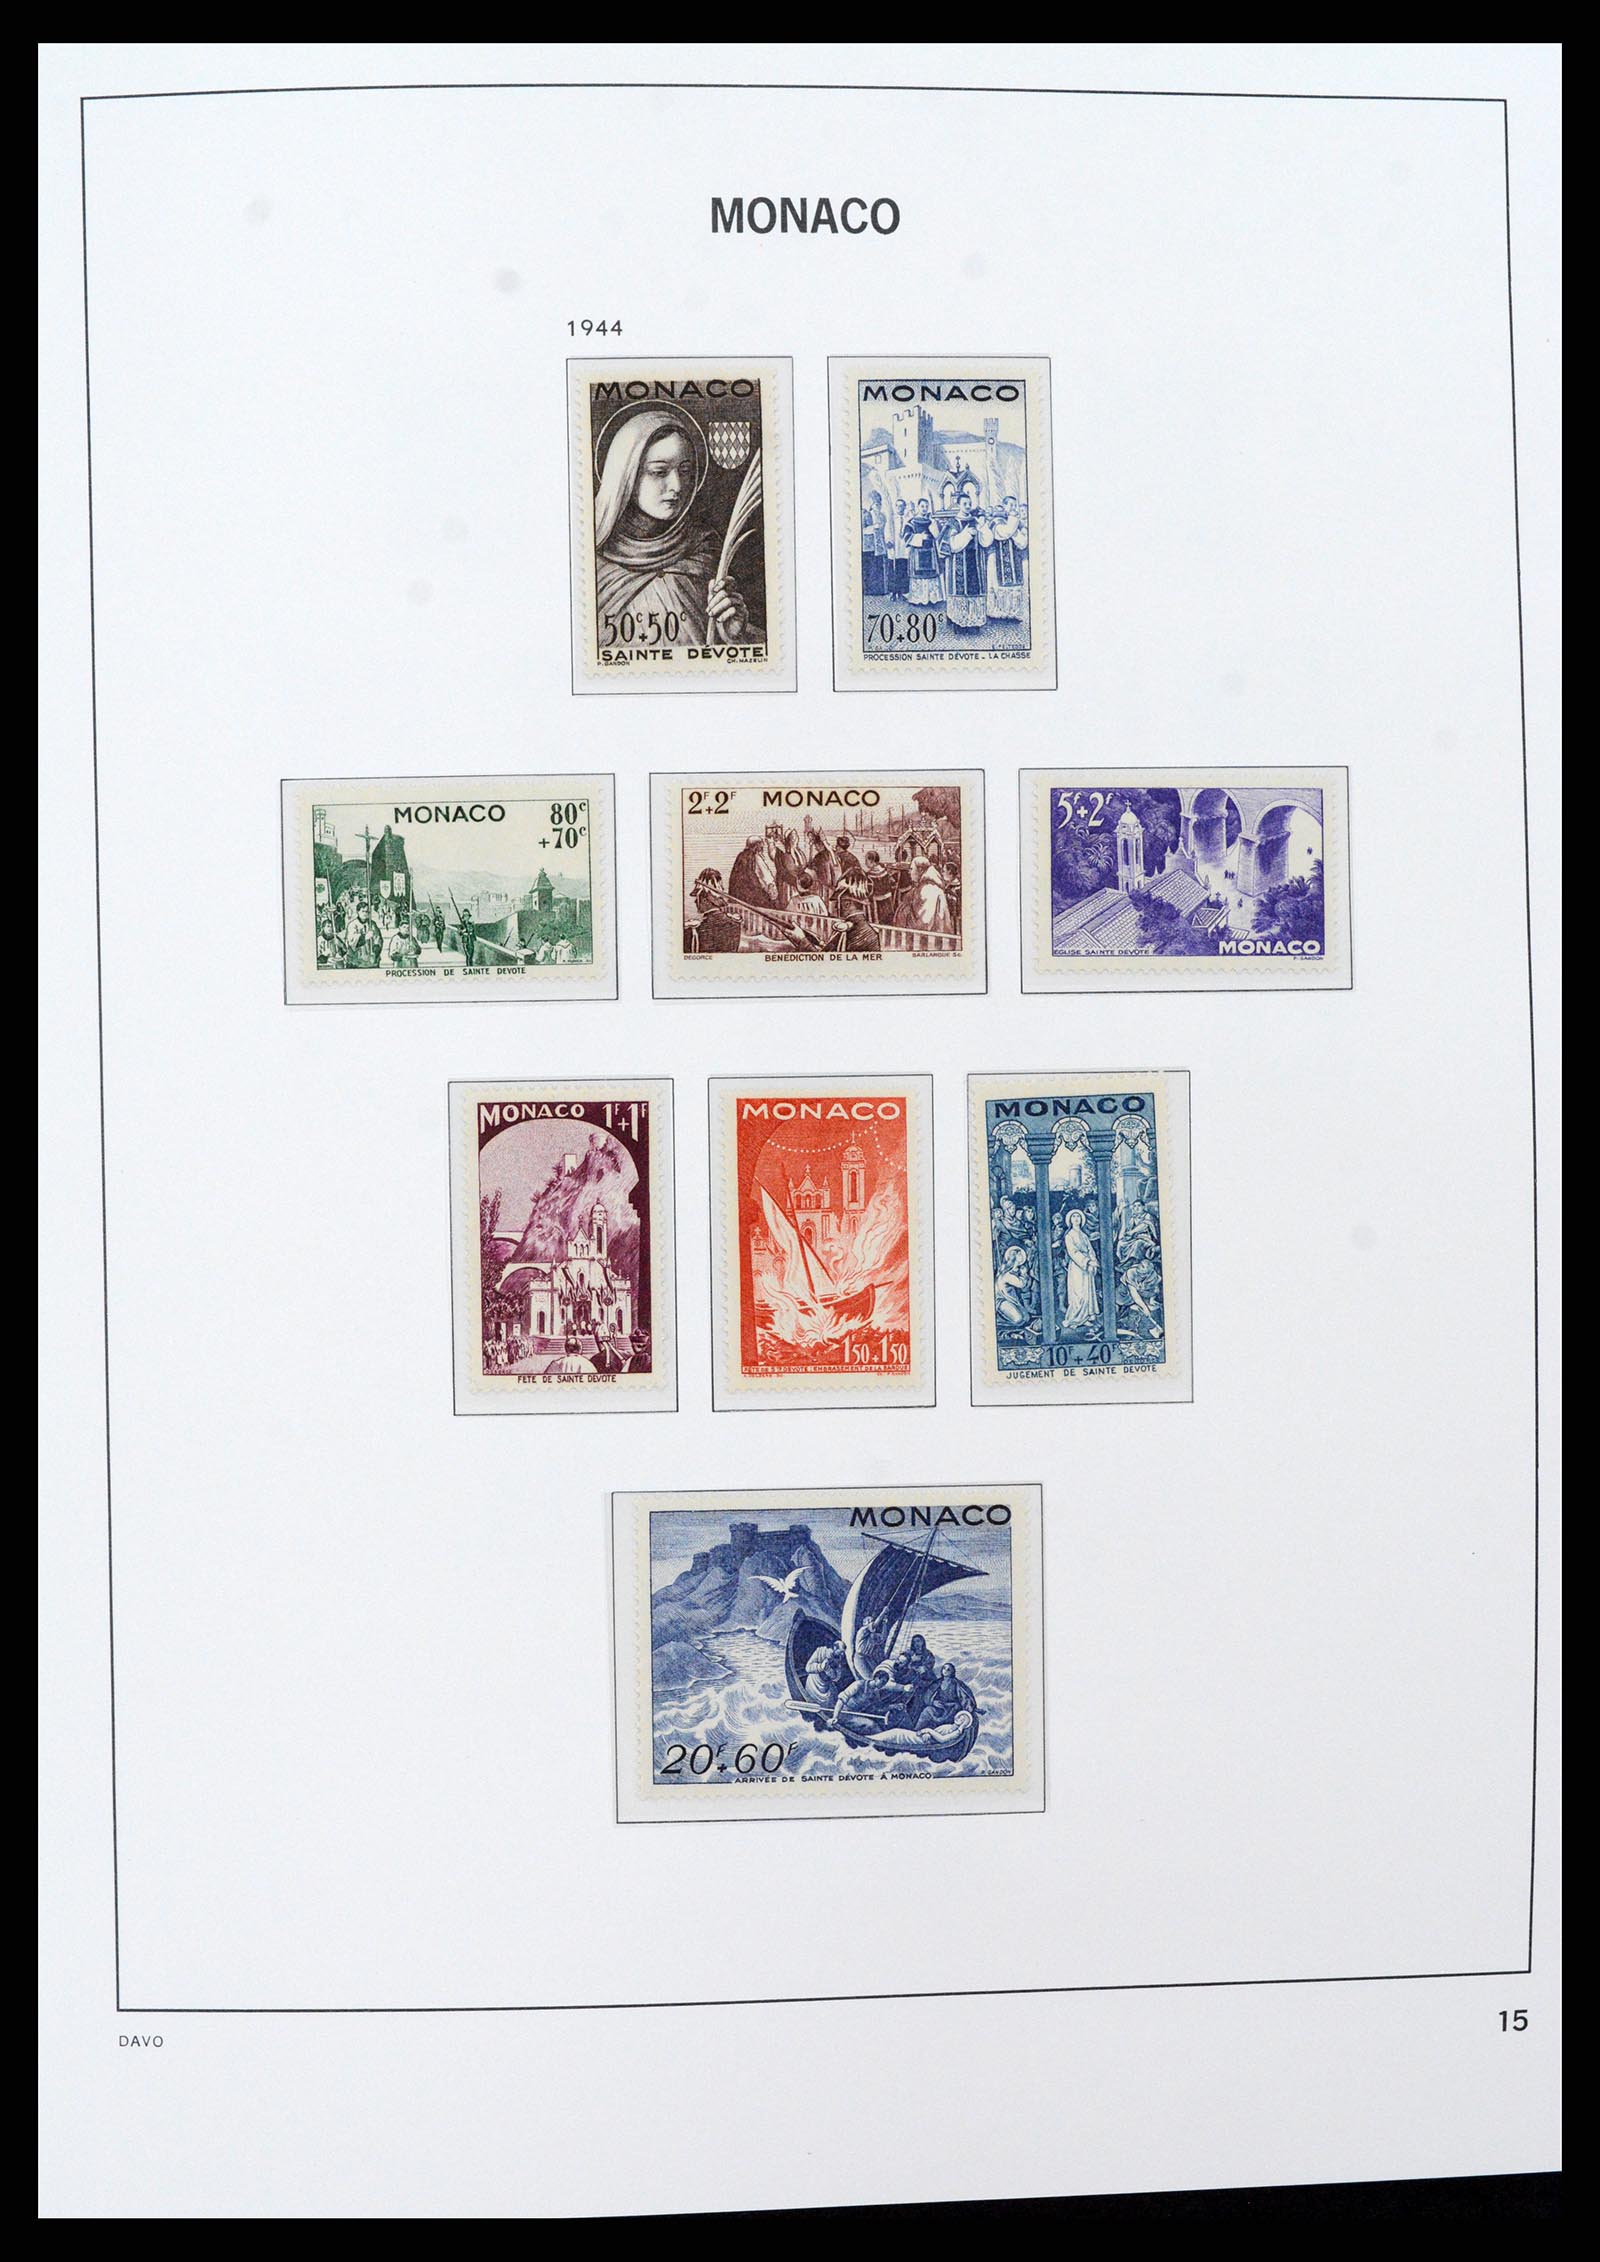 37279 015 - Stamp collection 37279 Monaco 1885-1969.